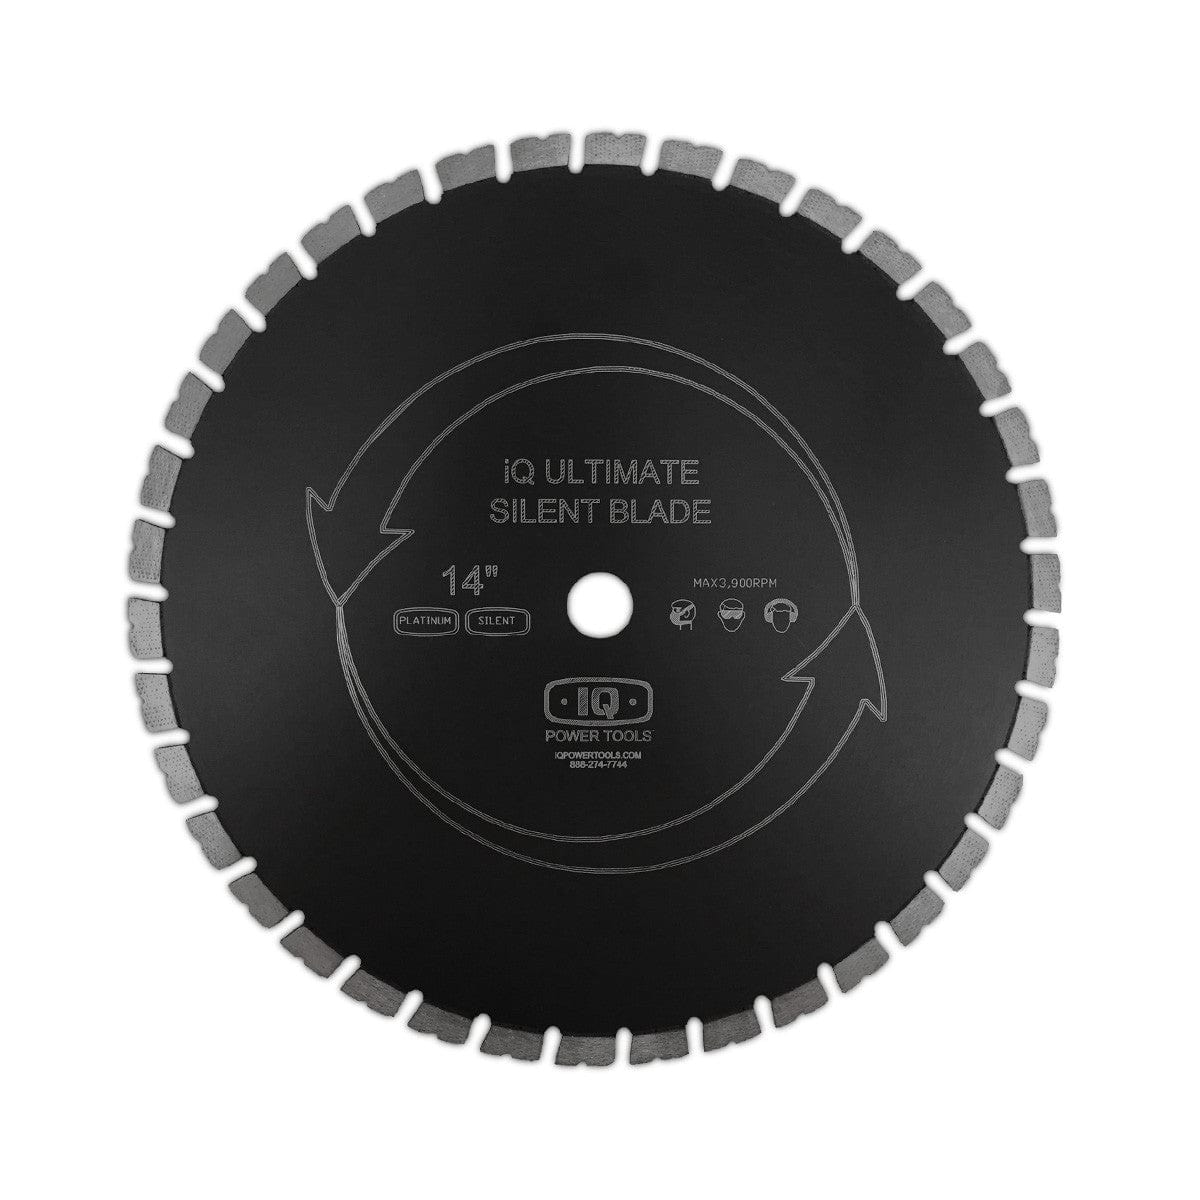 Masonry Blade 14"x.125 - Platinum (Silent Core)